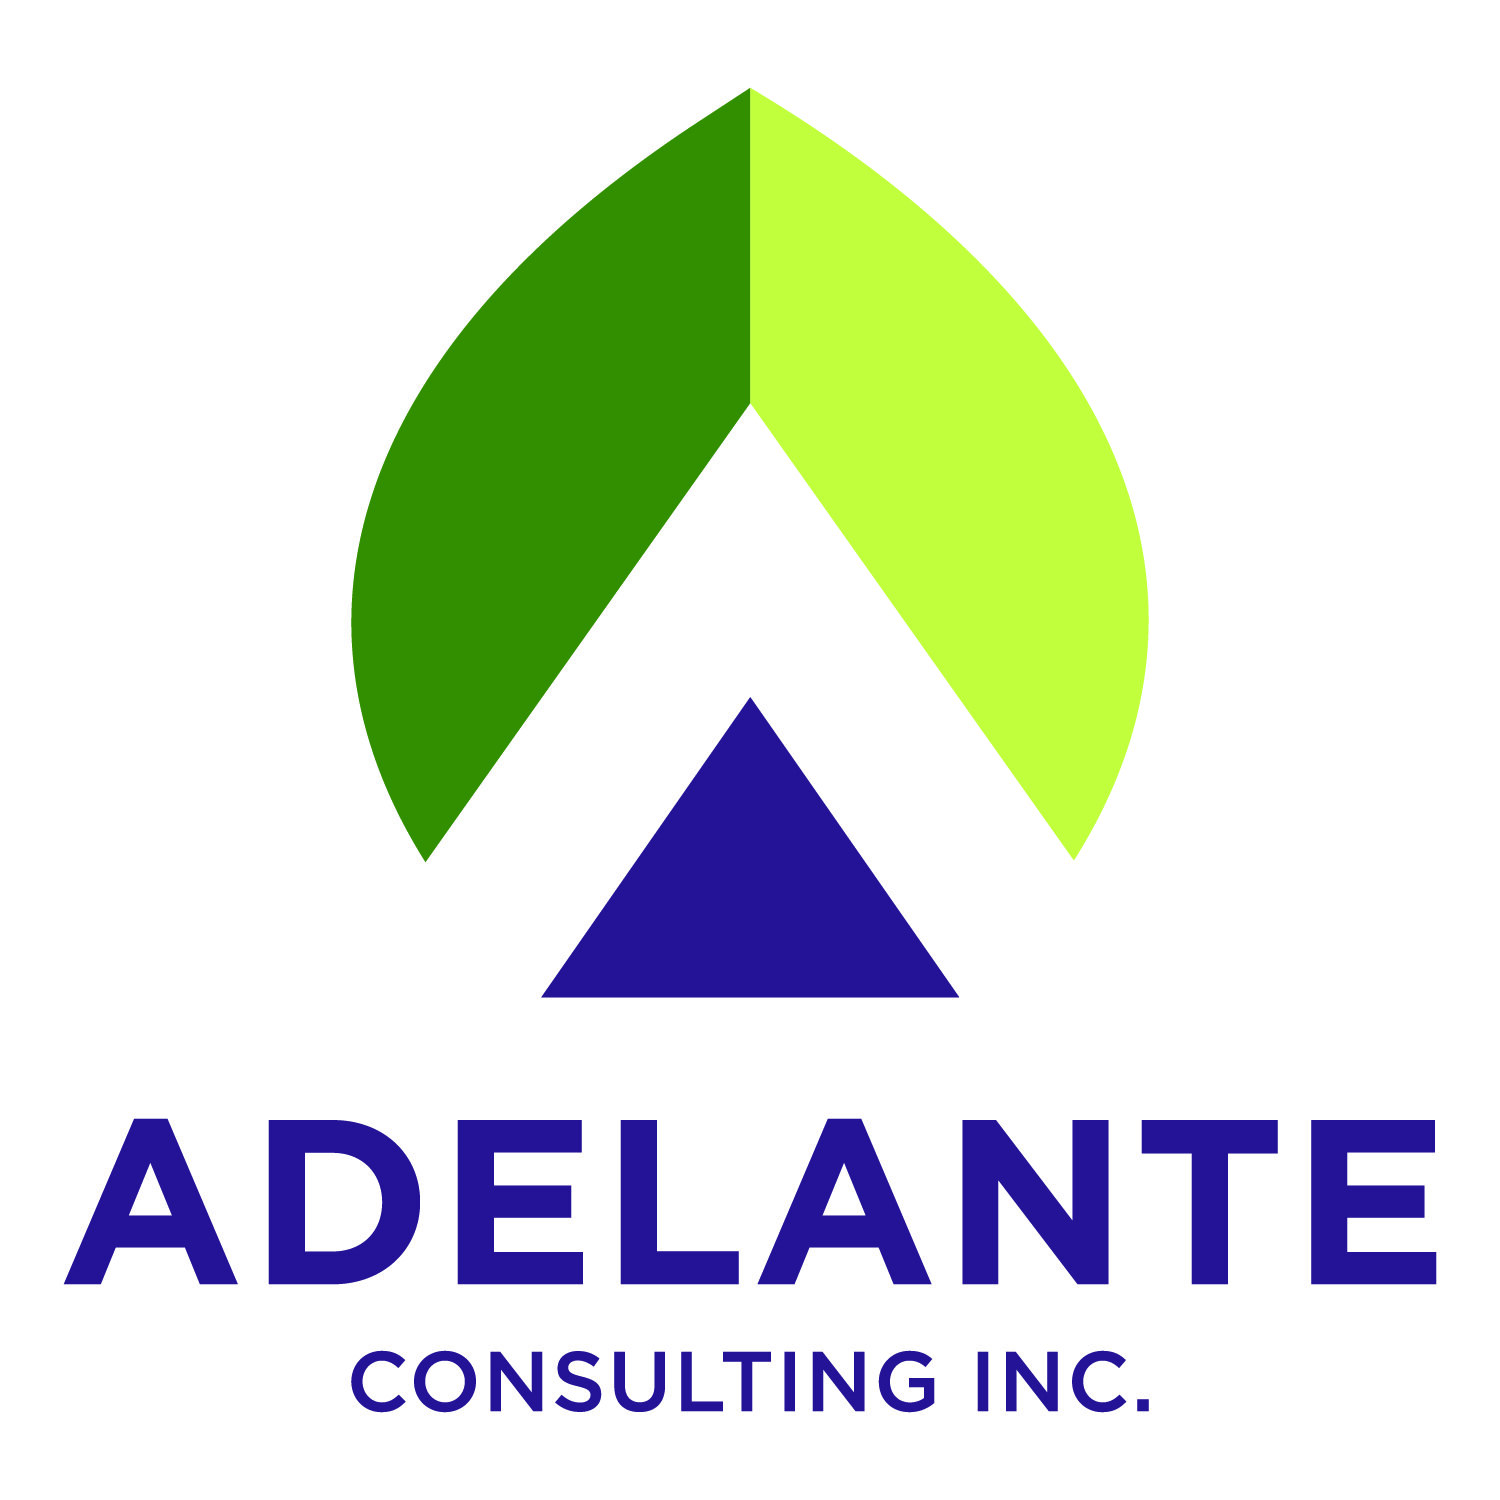 AdelanteConsultingInc_Logo_FullColor_CMYK.jpg